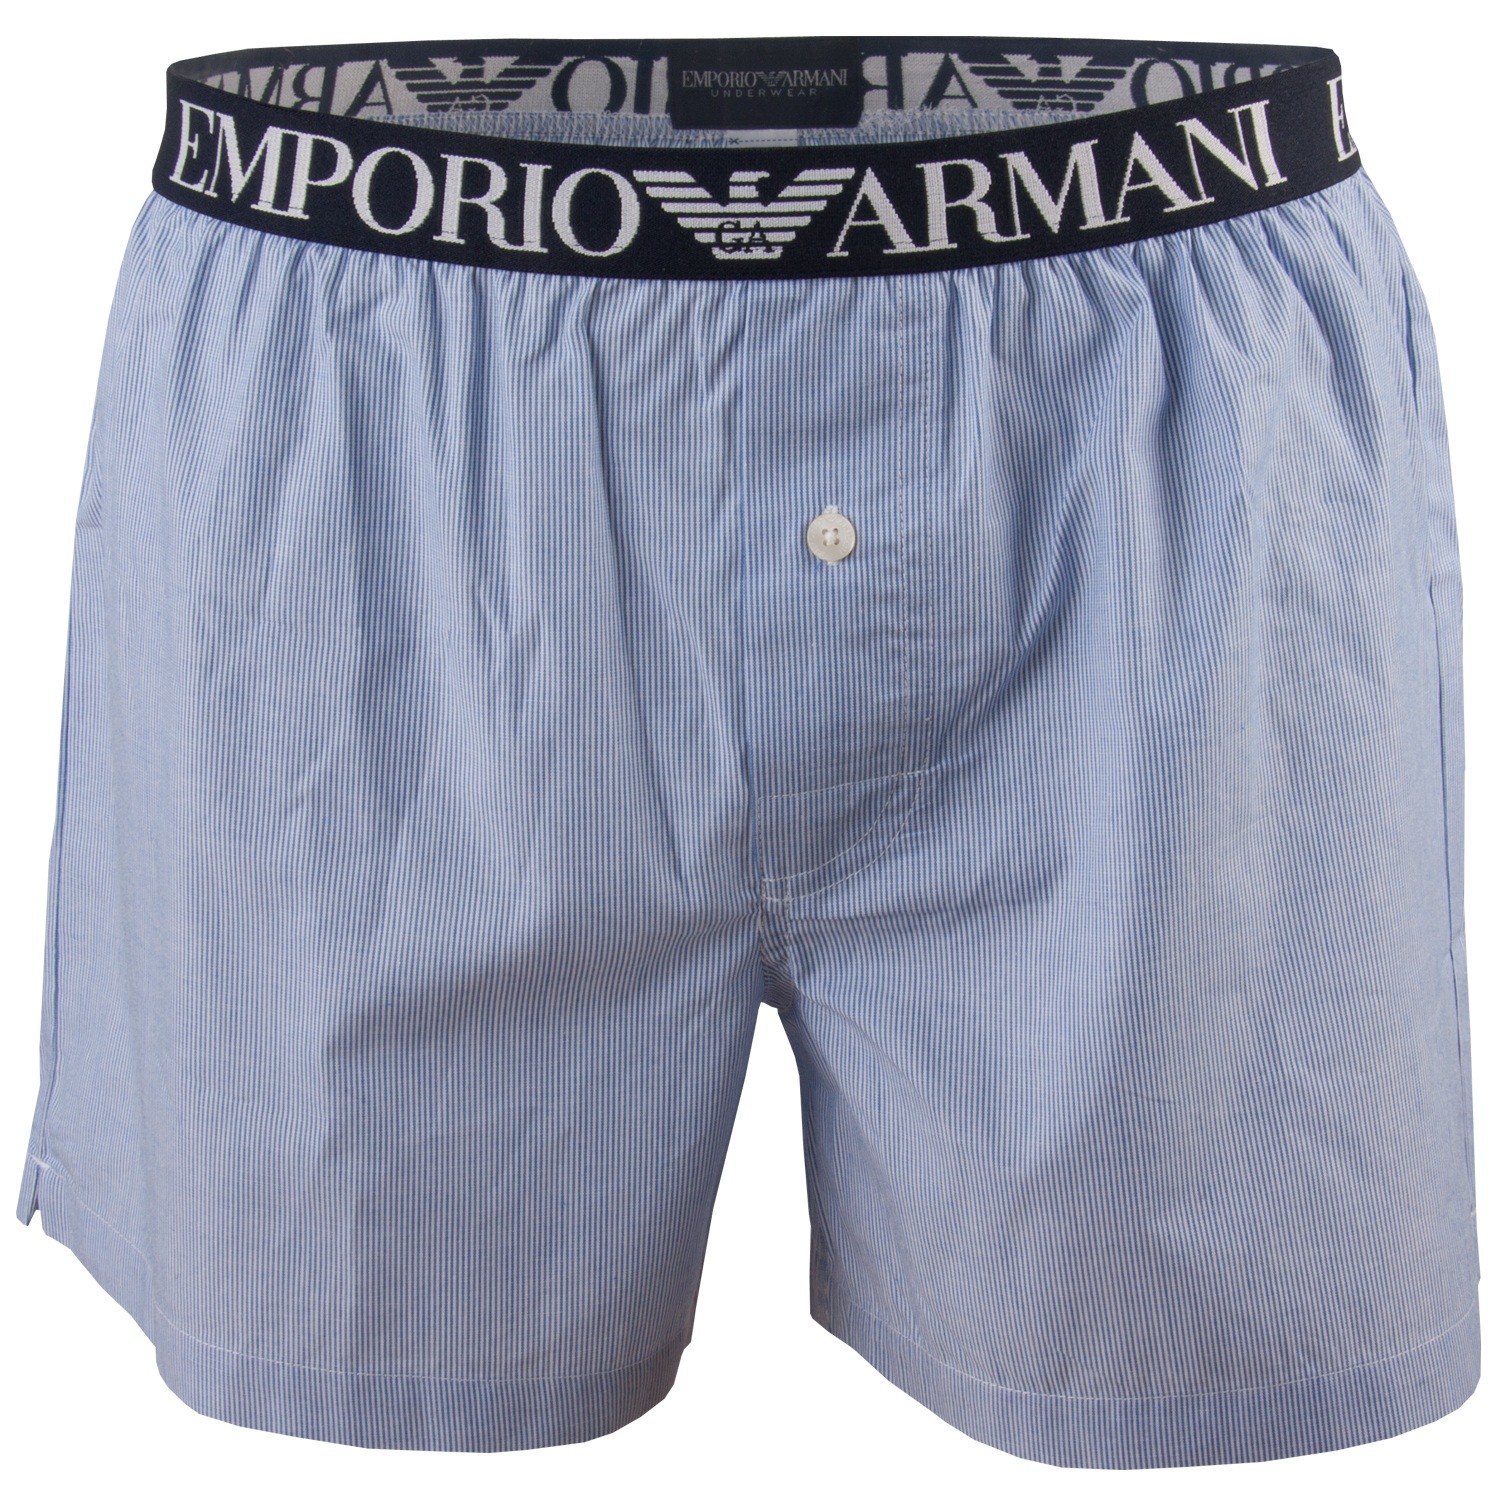 armani boxer shorts